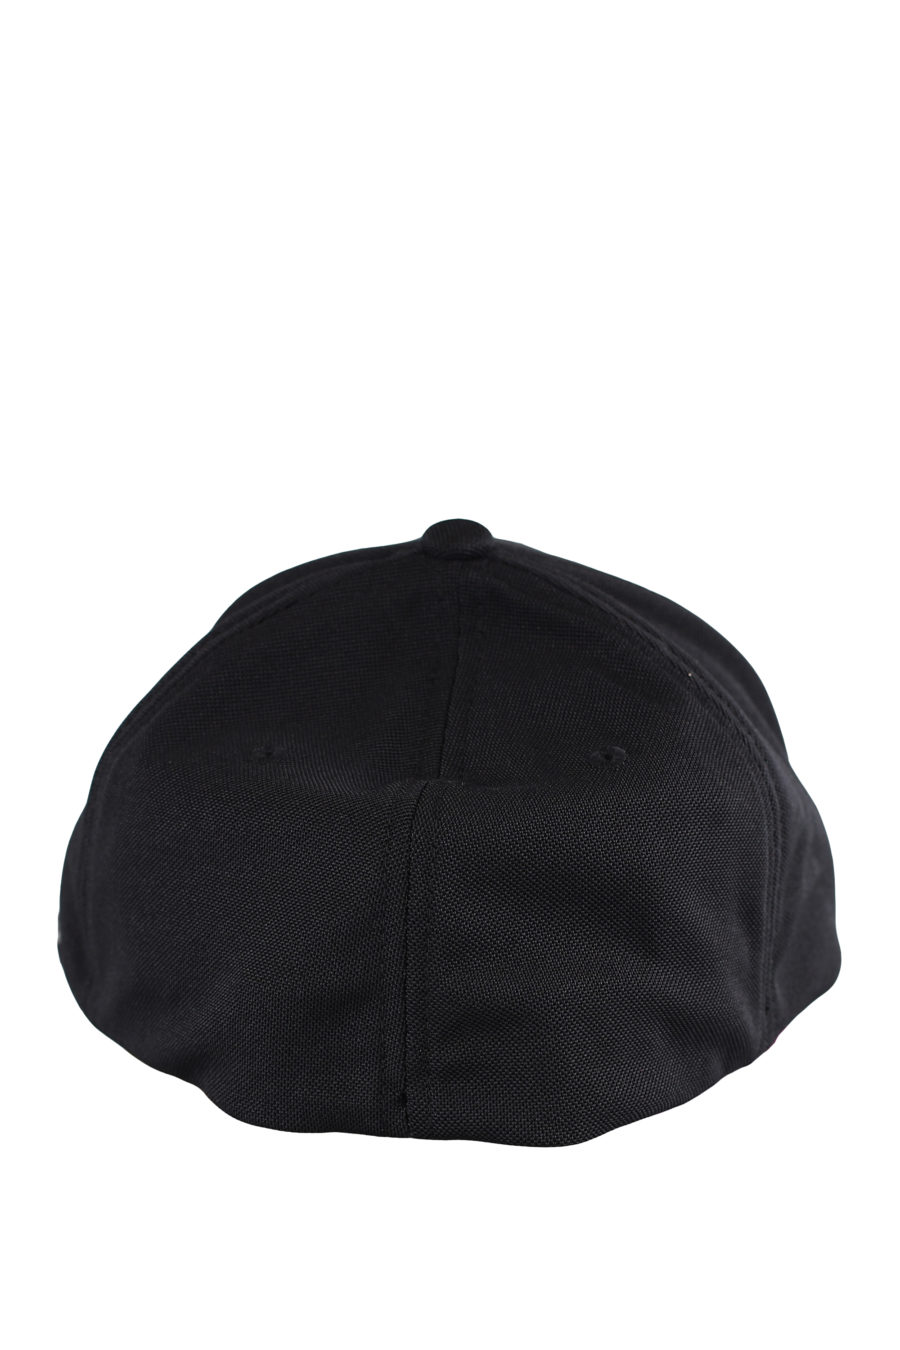 Gorra negra con "Karl" engomado en blanco - IMG 9605